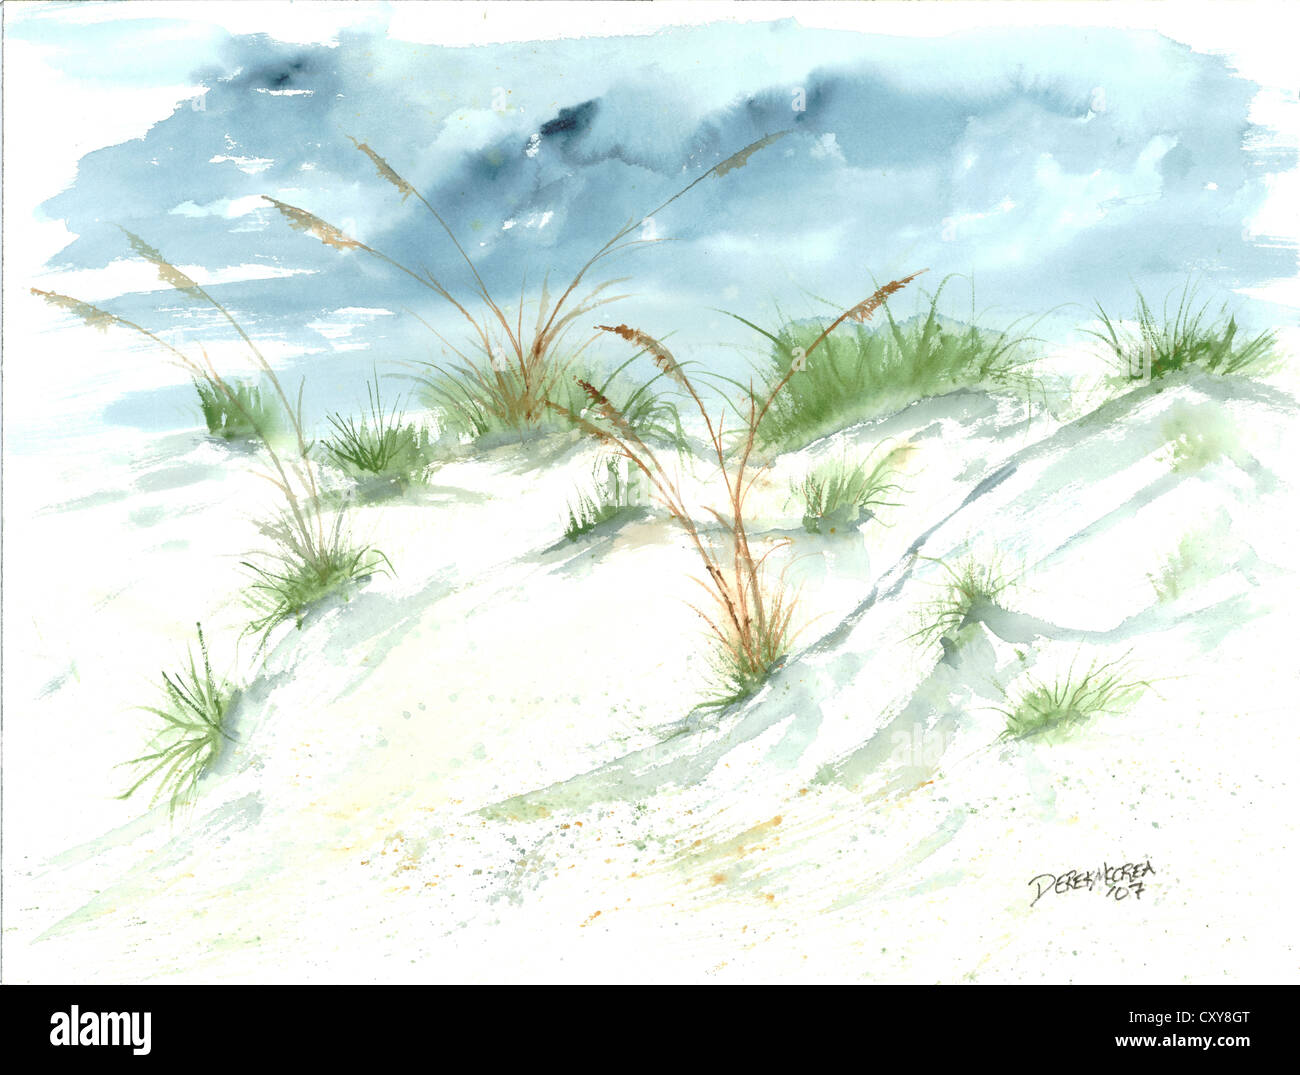 beach sand dunes watercolor painting coastal decor Stock Photo